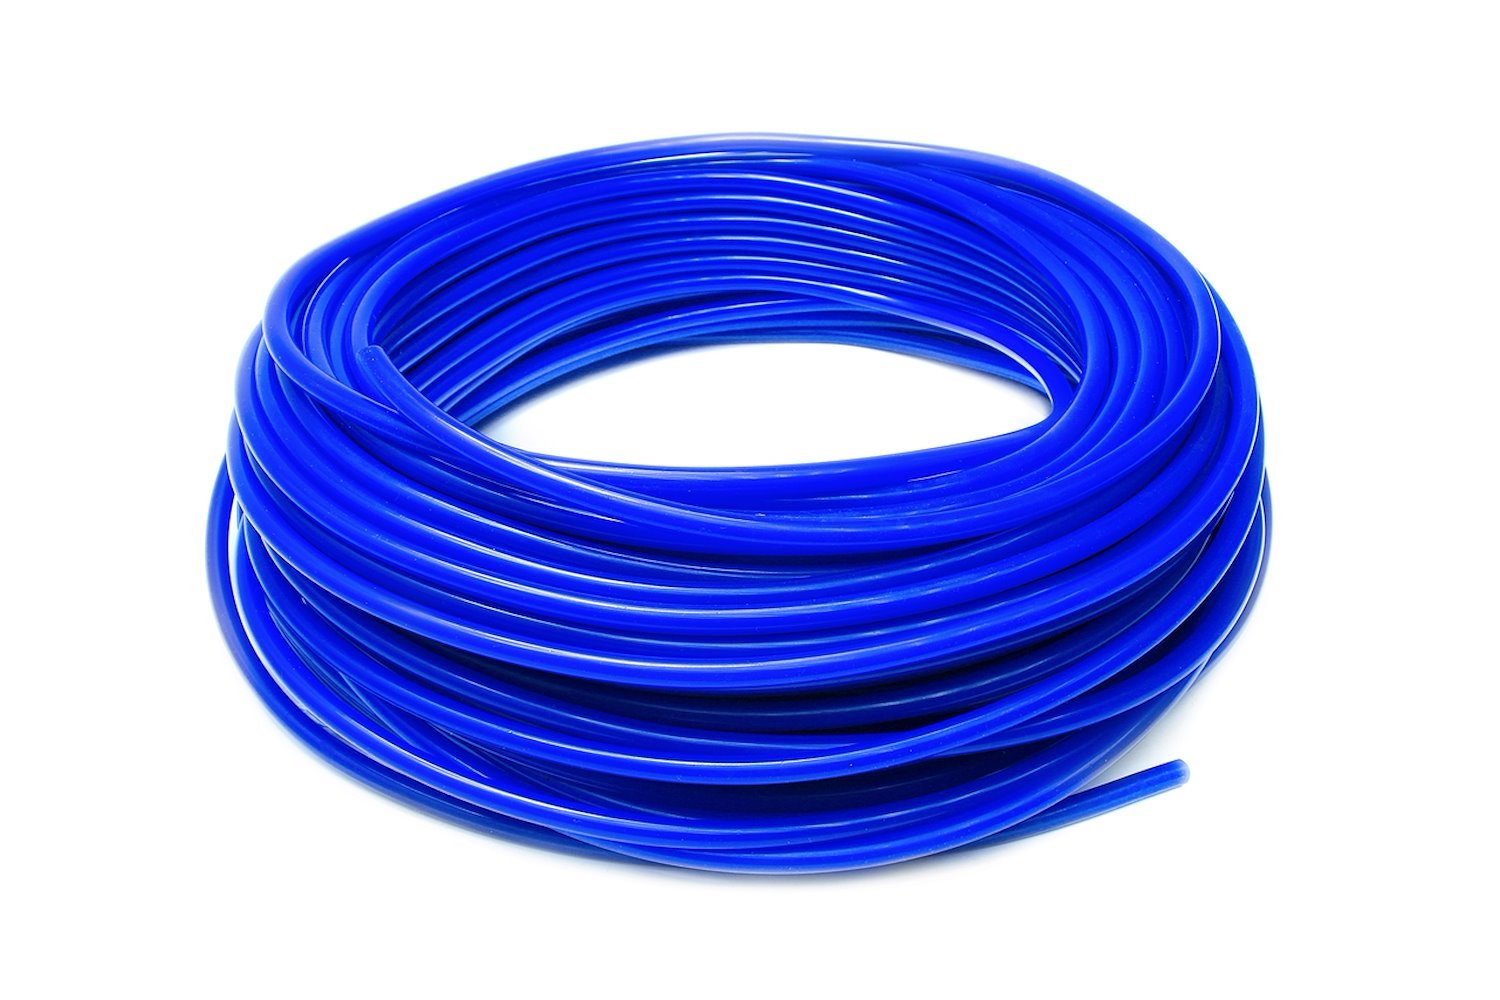 HTSVH35-BLUEx100 High-Temperature Silicone Vacuum Hose Tubing, 3.5 mm ID, 100 ft. Roll, Blue